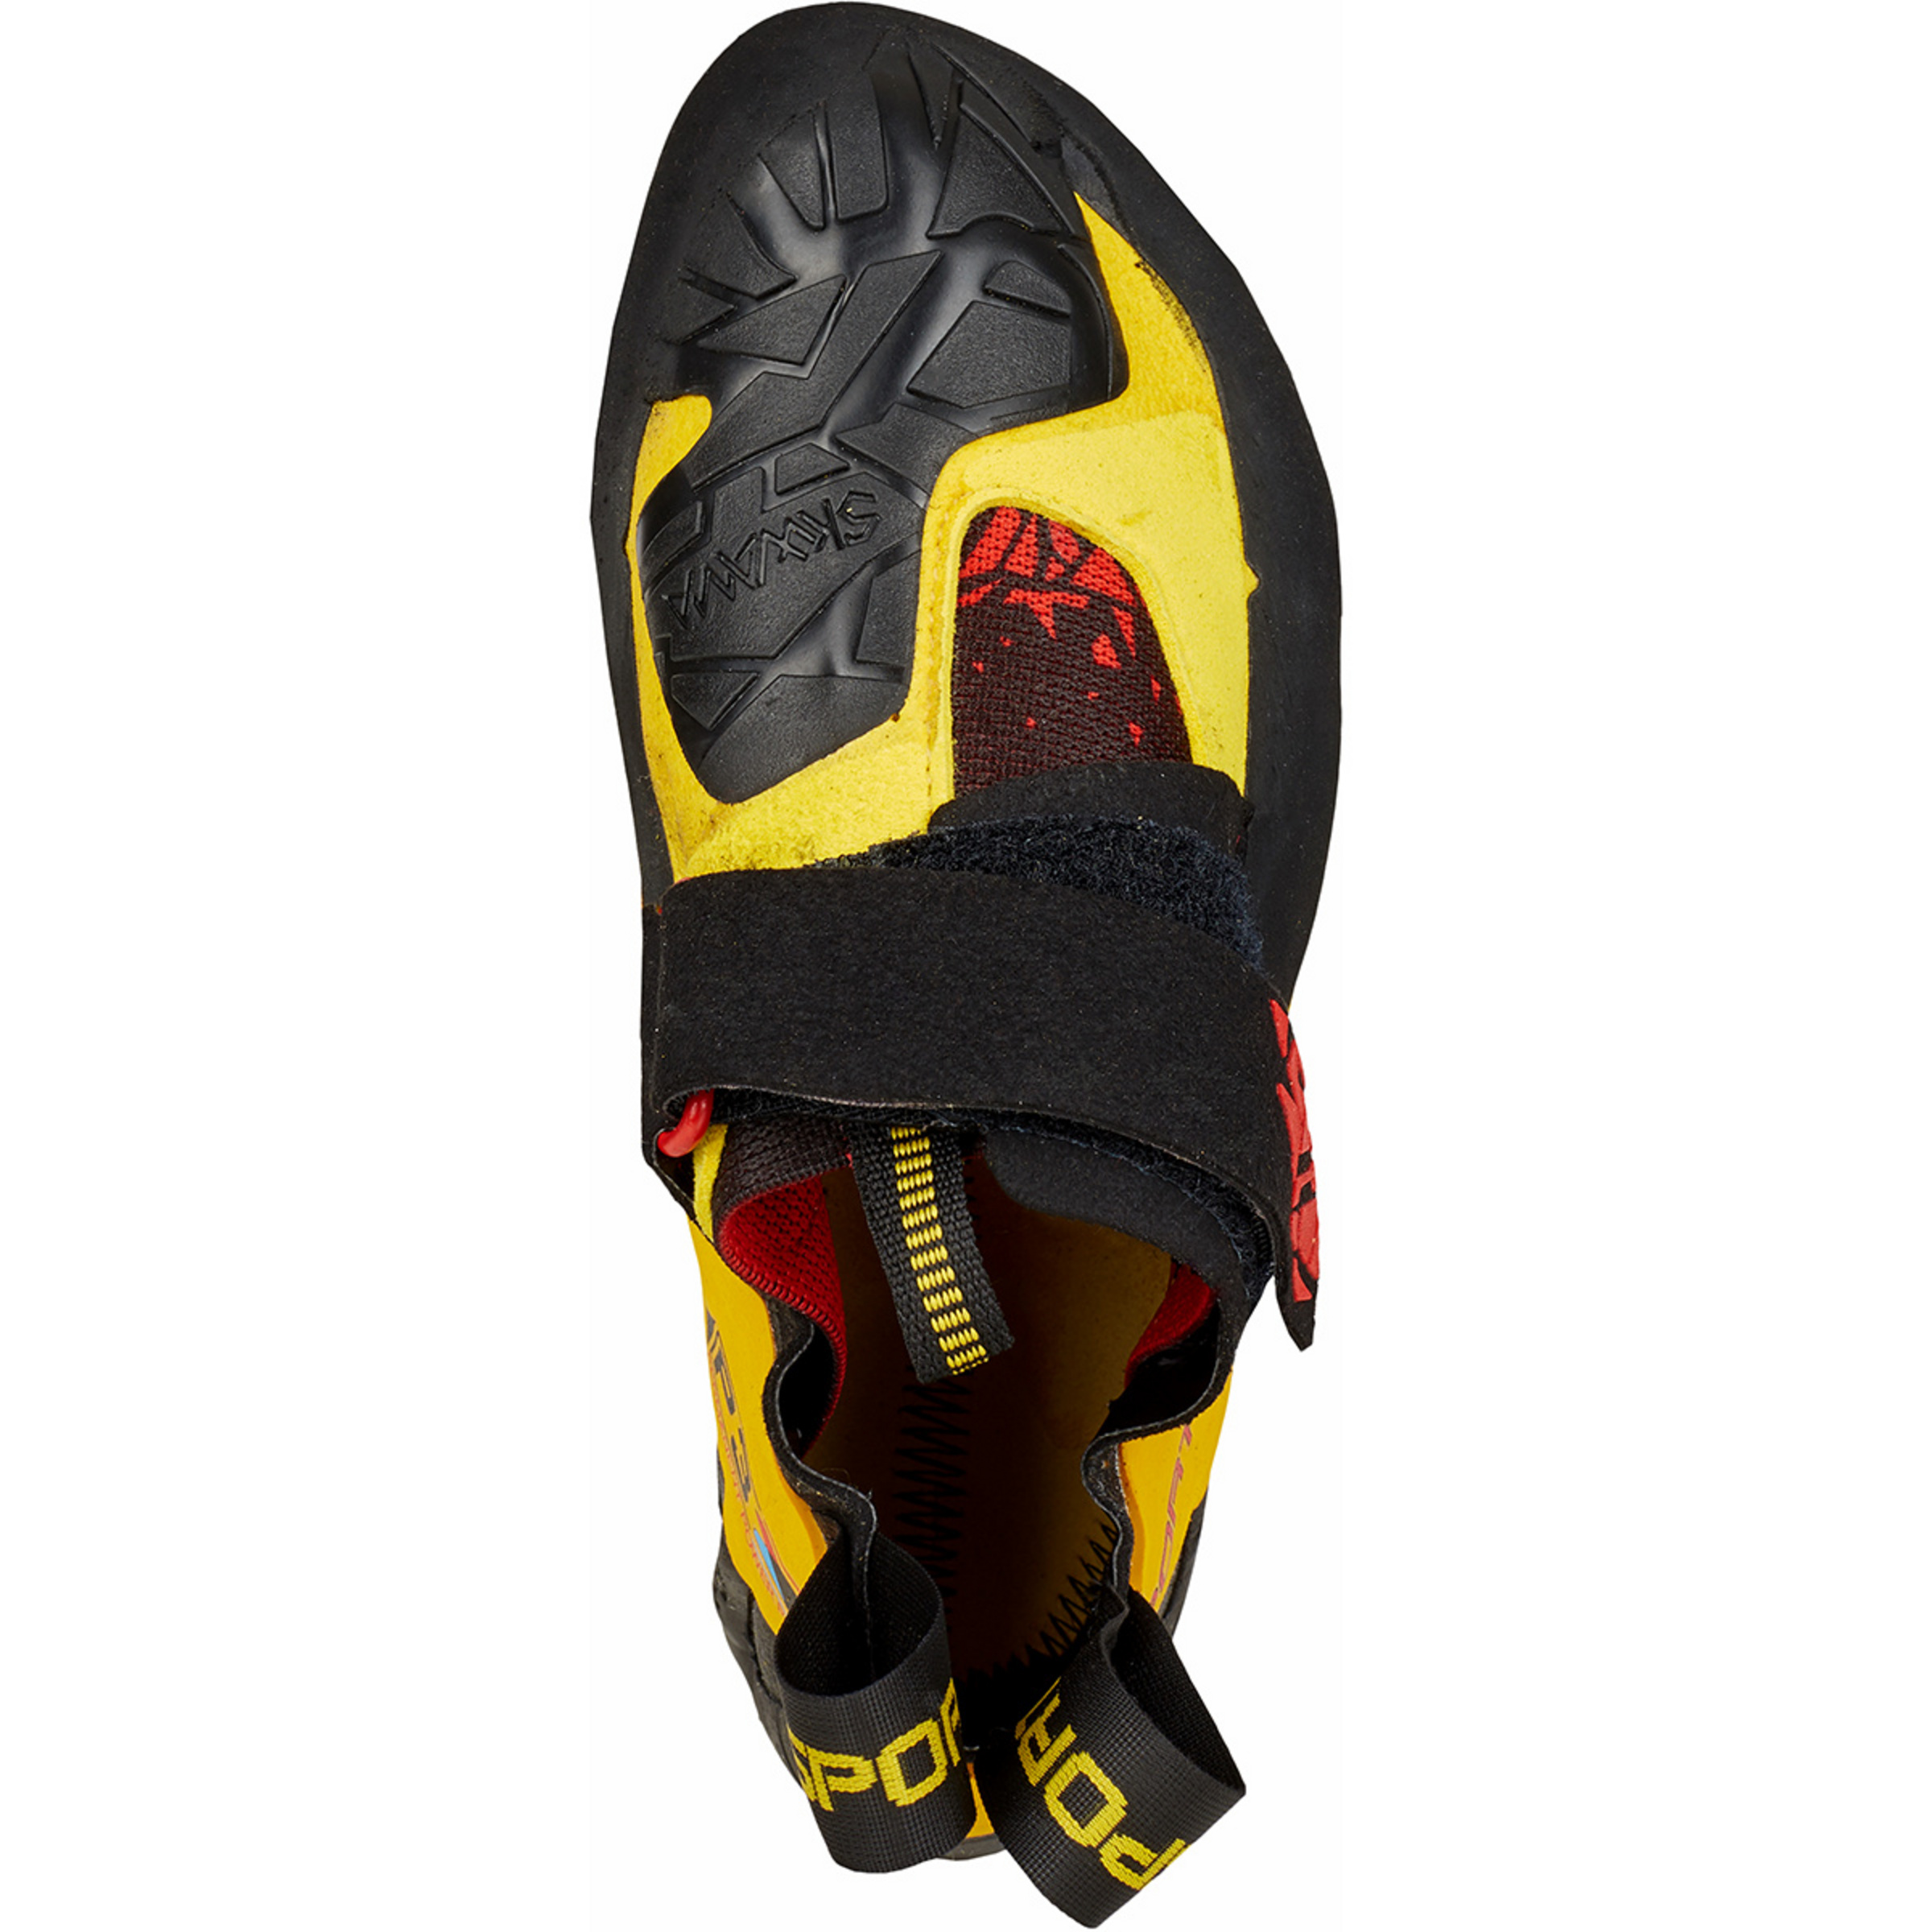 La Sportiva Skwama - black yellow - Shop Outdoor Online